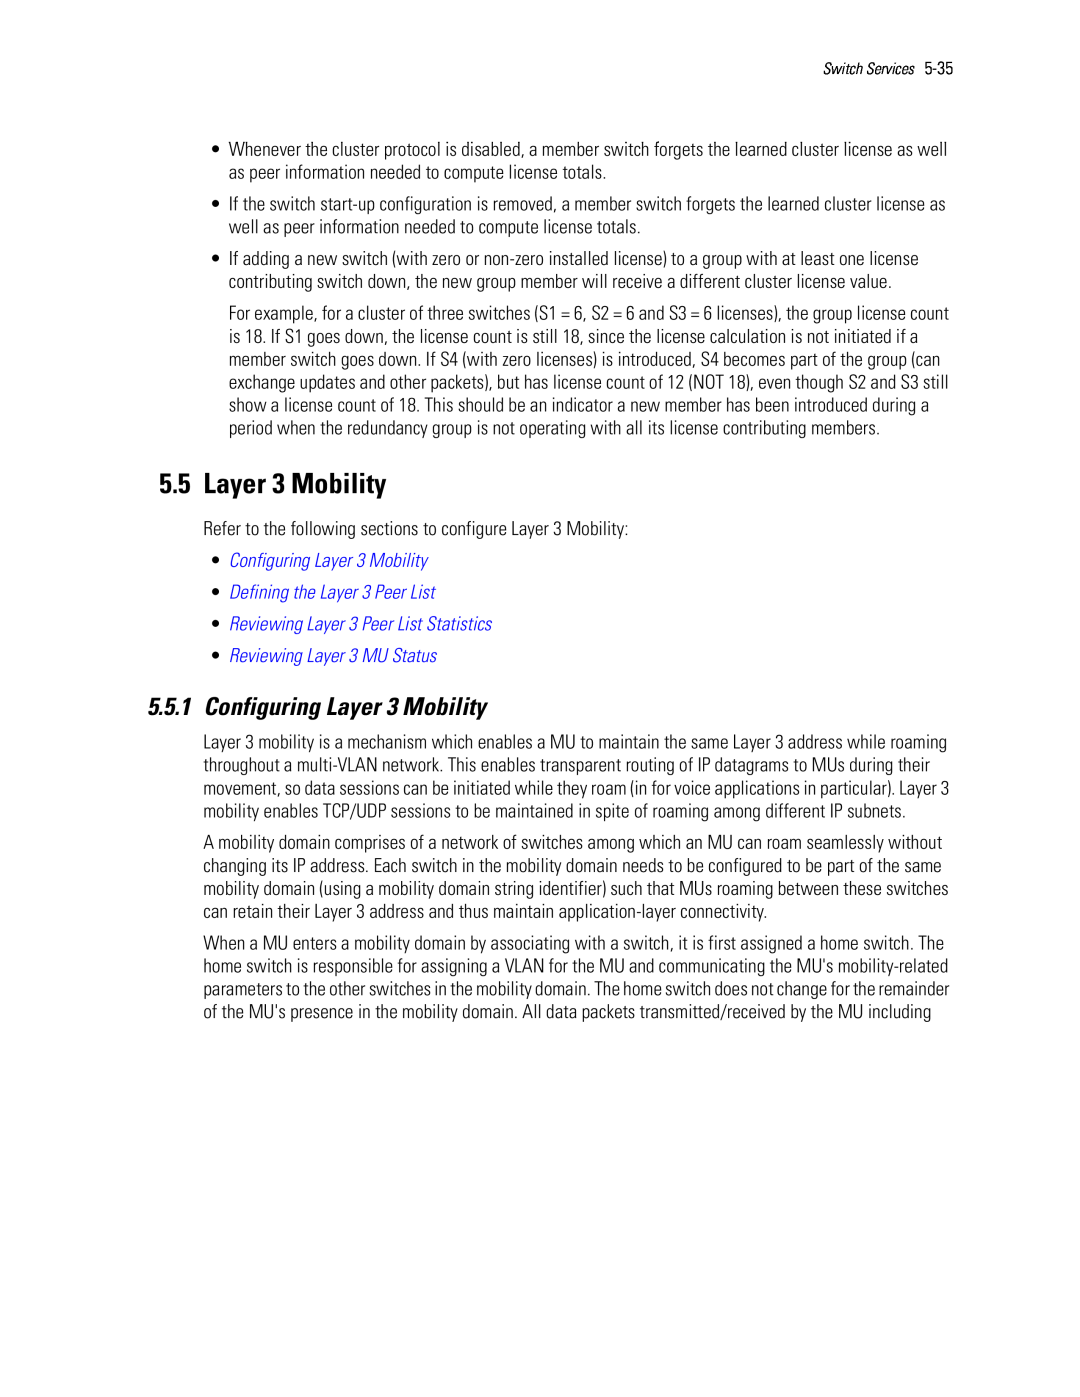 Motorola WS5100 manual 5.5Layer 3 Mobility, 5.5.1Configuring Layer 3 Mobility, •Configuring Layer 3 Mobility 